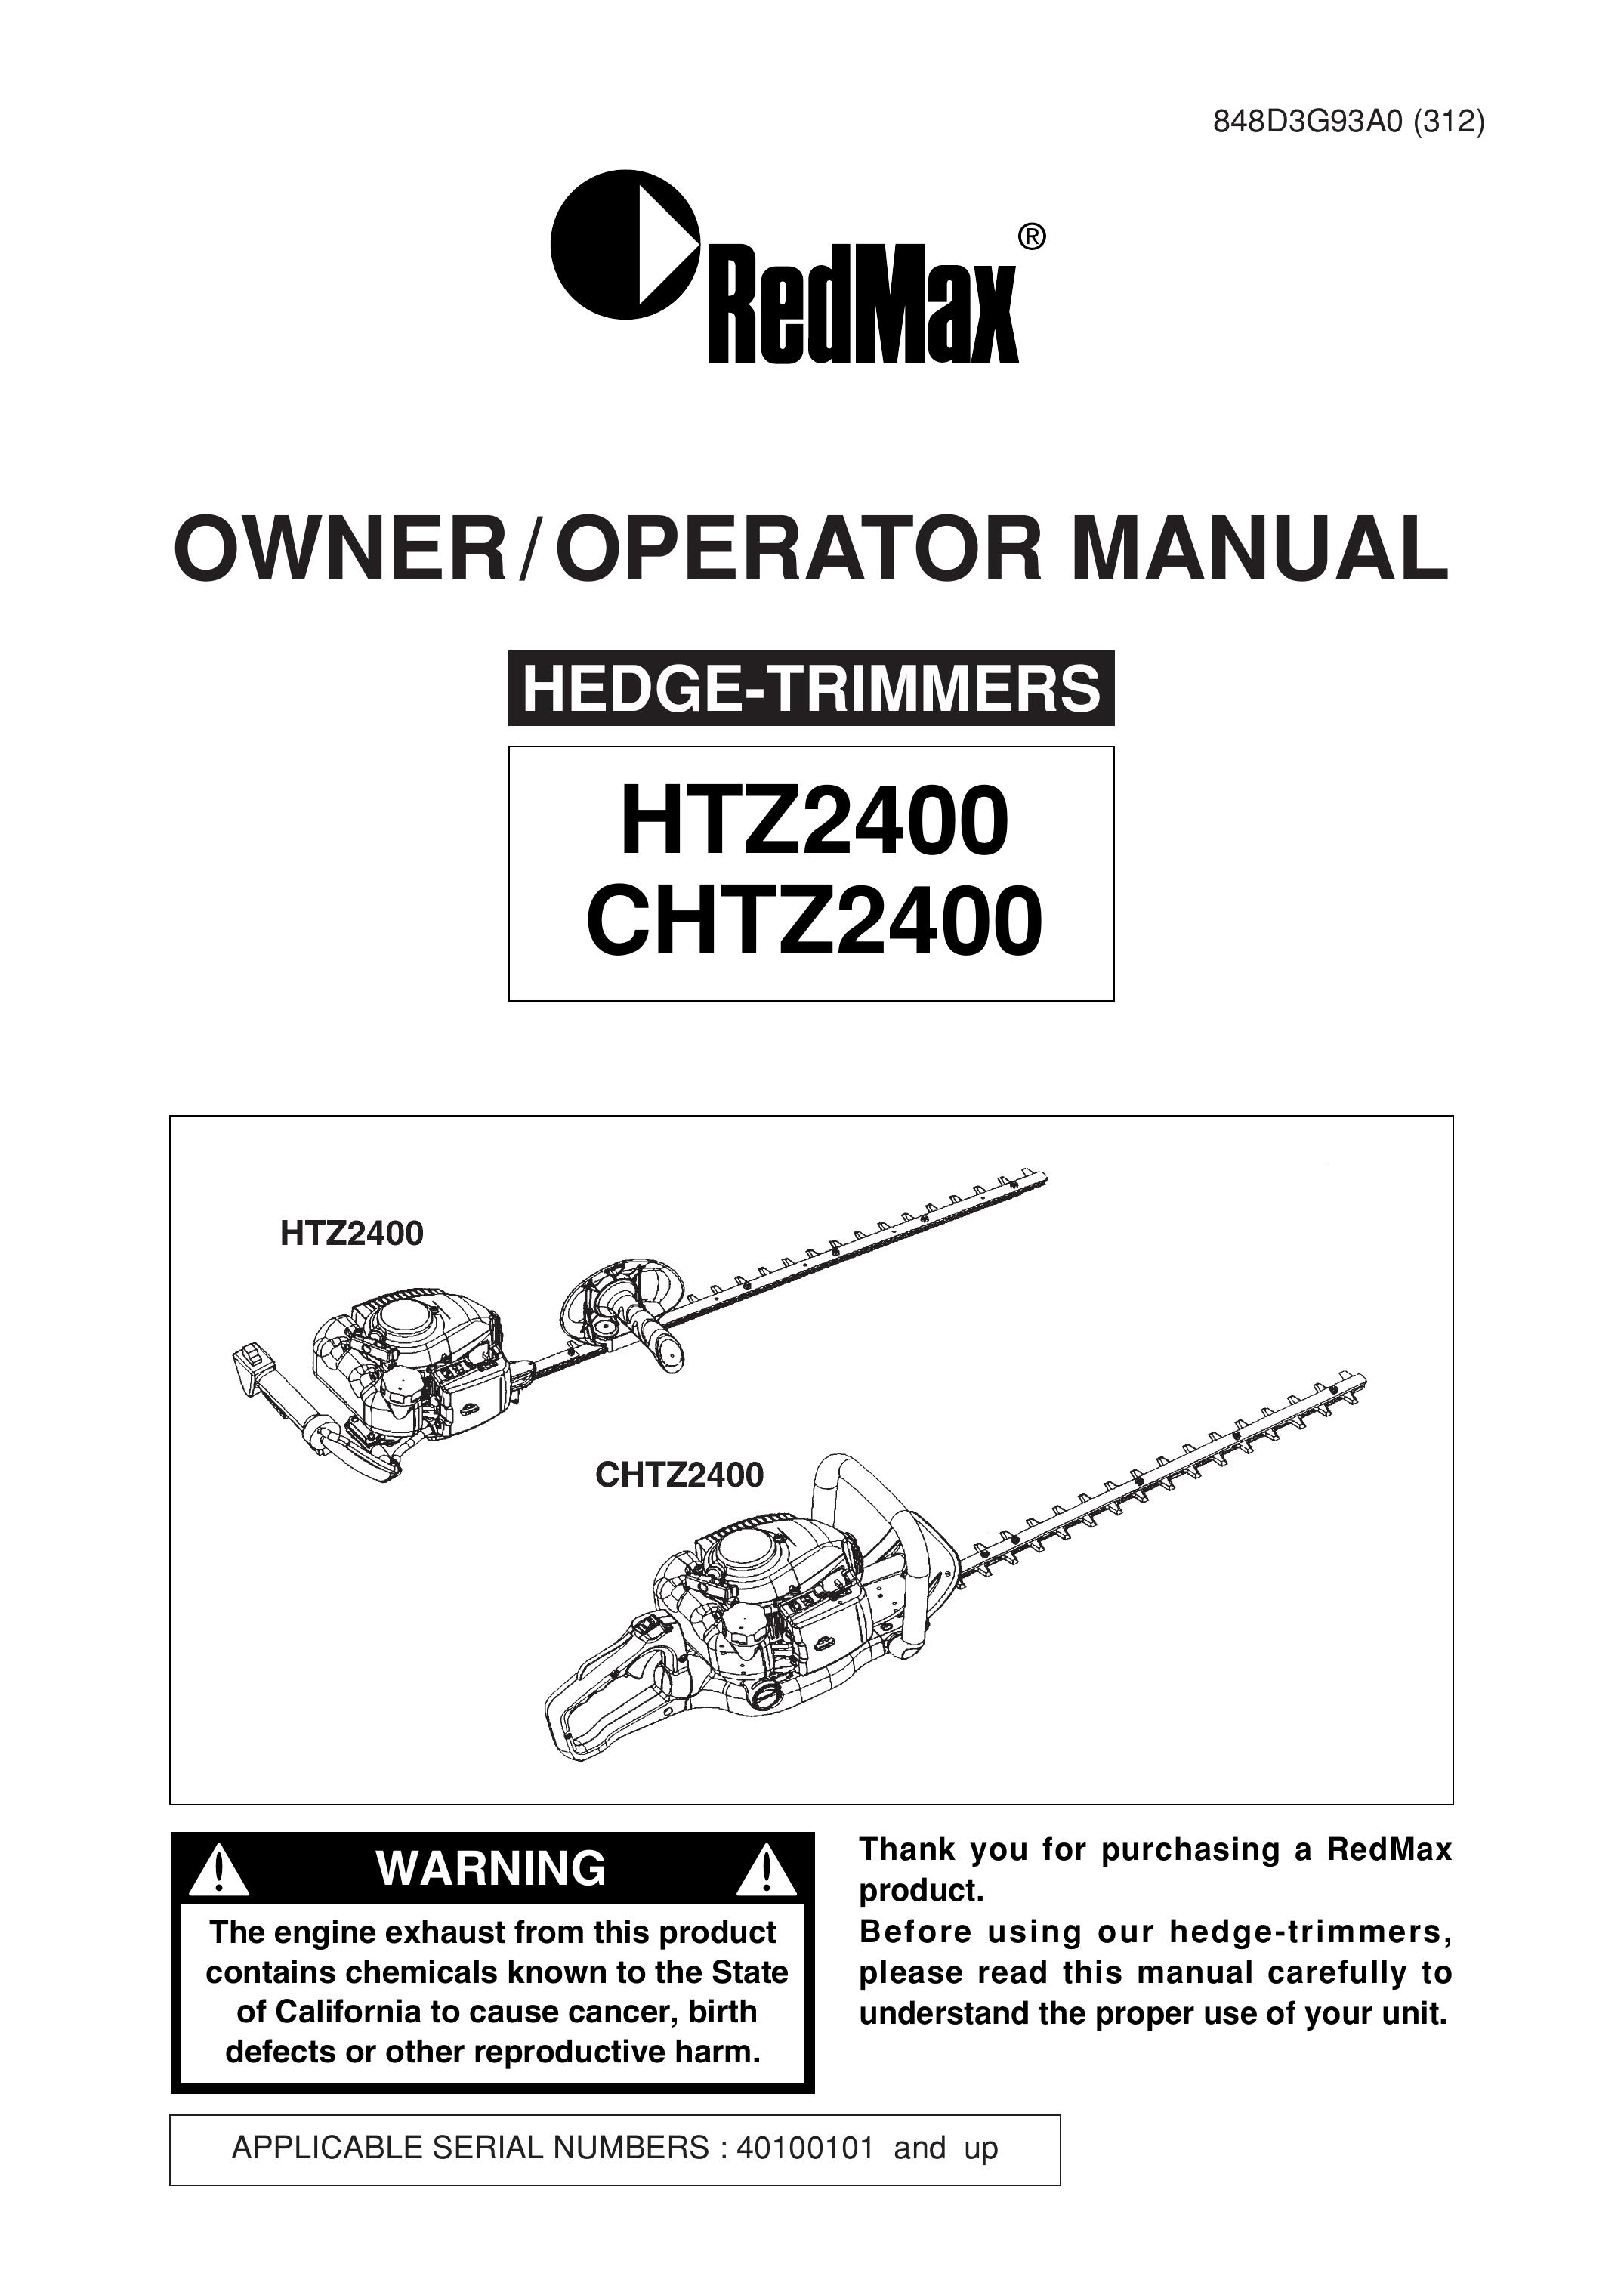 RedMax CHTZ2400 Trimmer User Manual